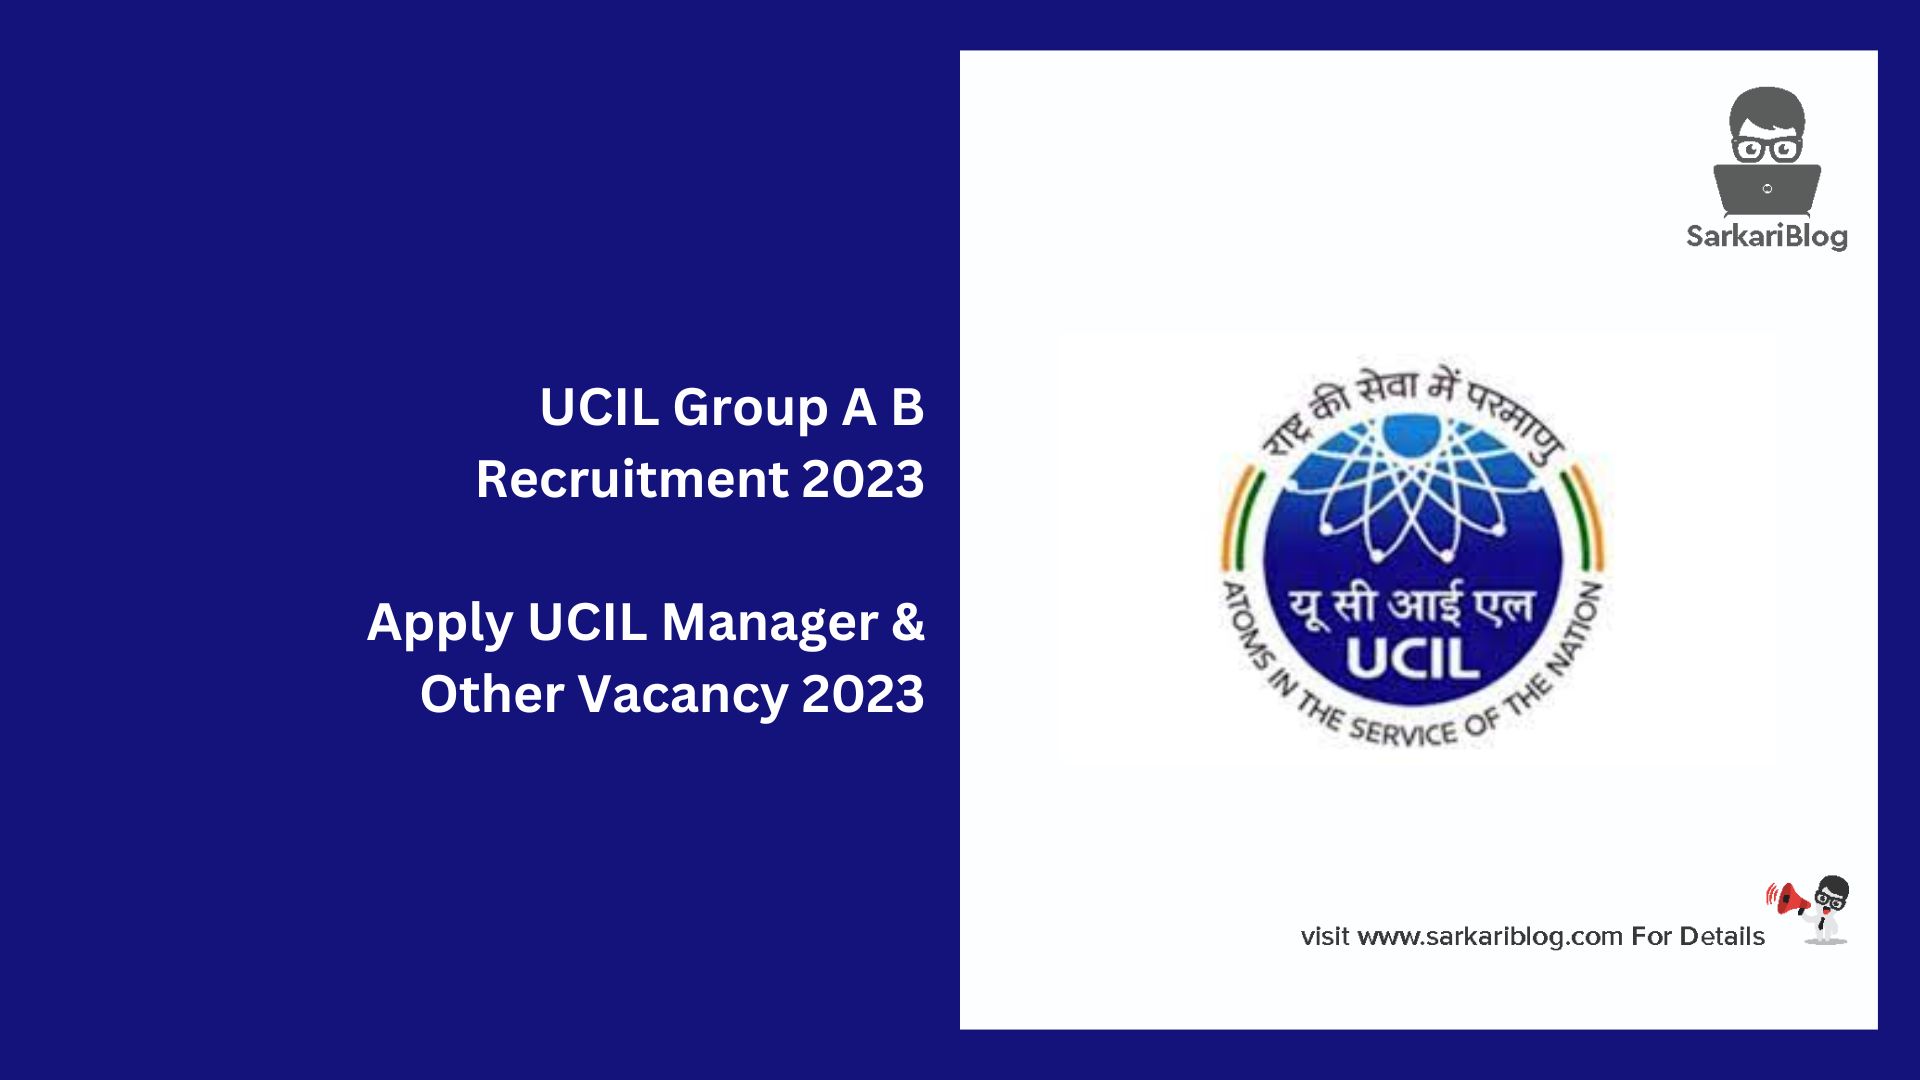 UCIL Group A B Recruitment 2023